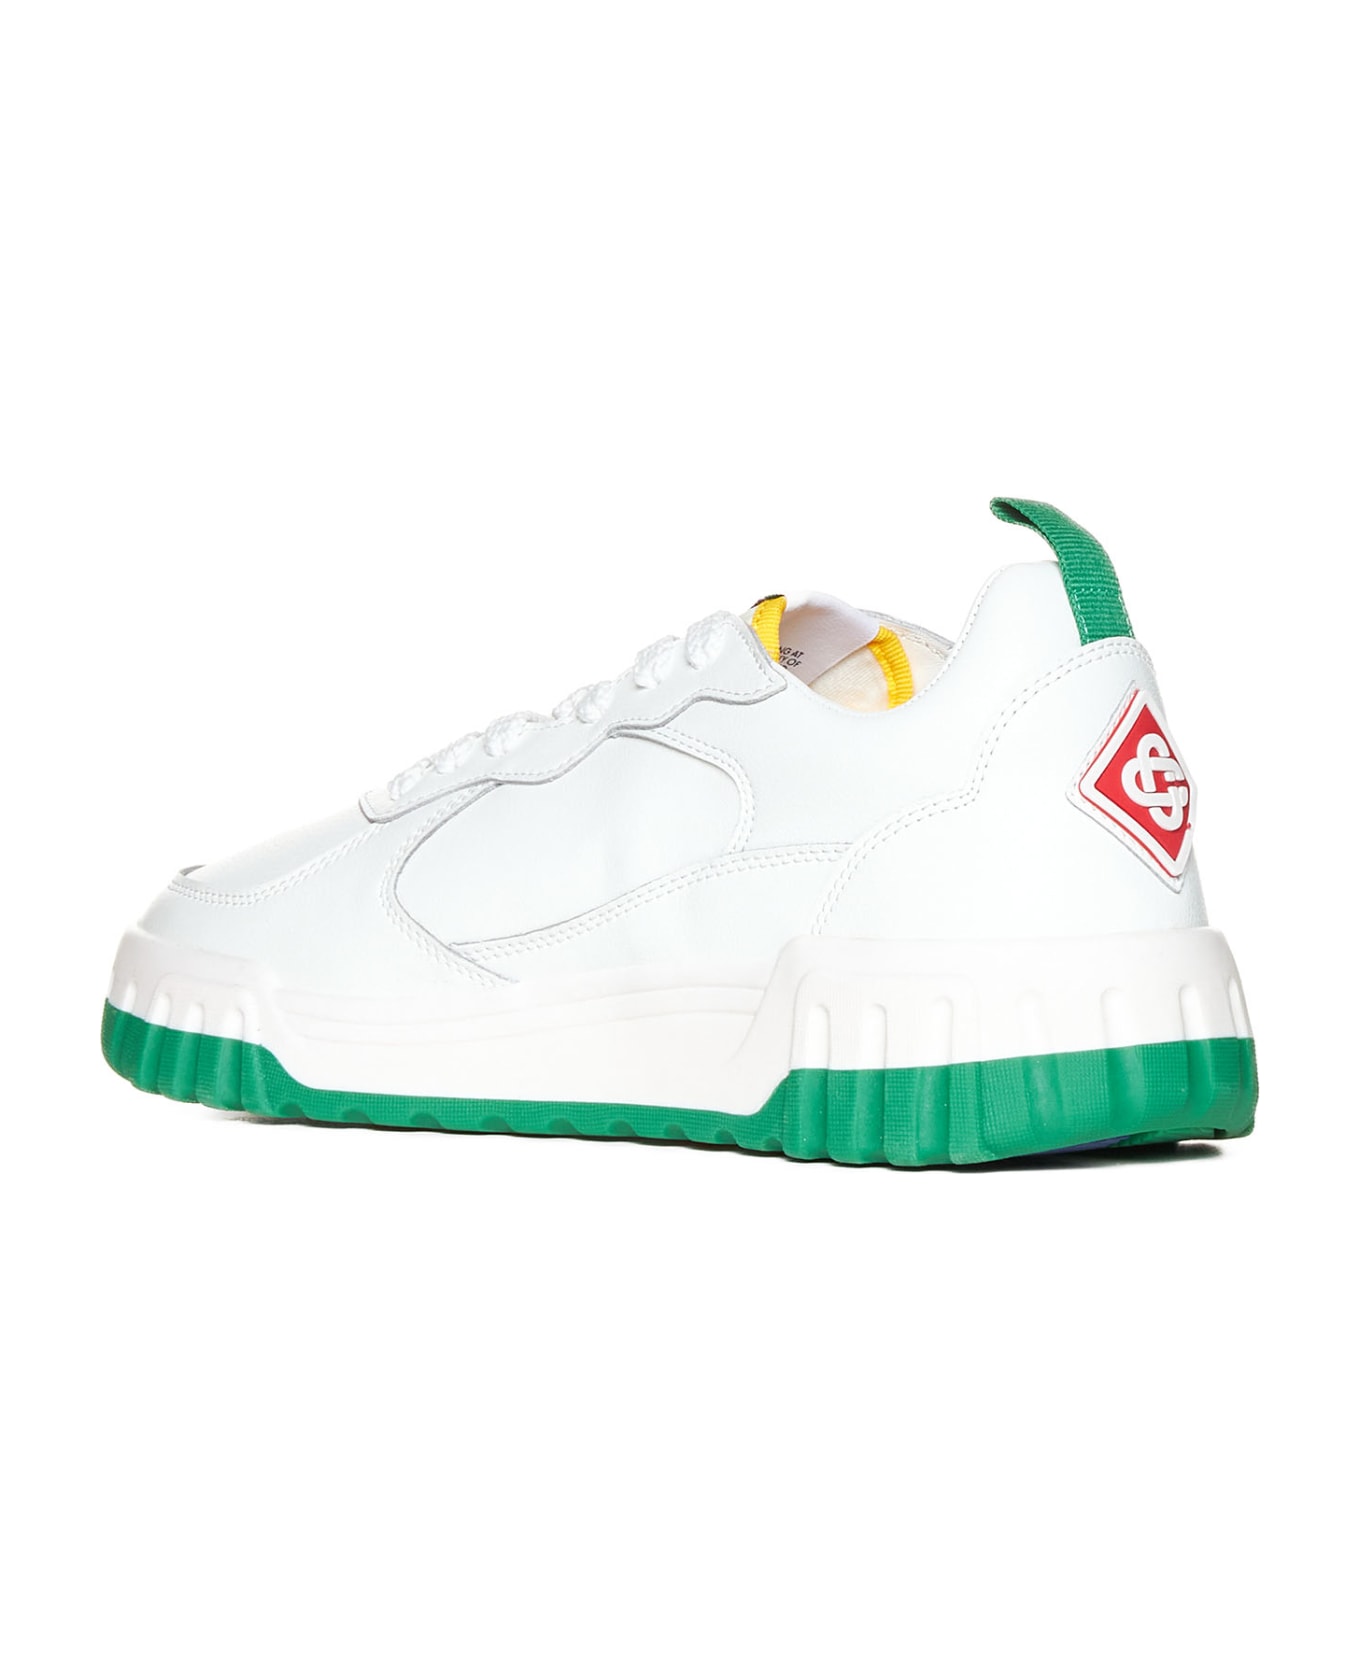 Casablanca Sneakers - White green